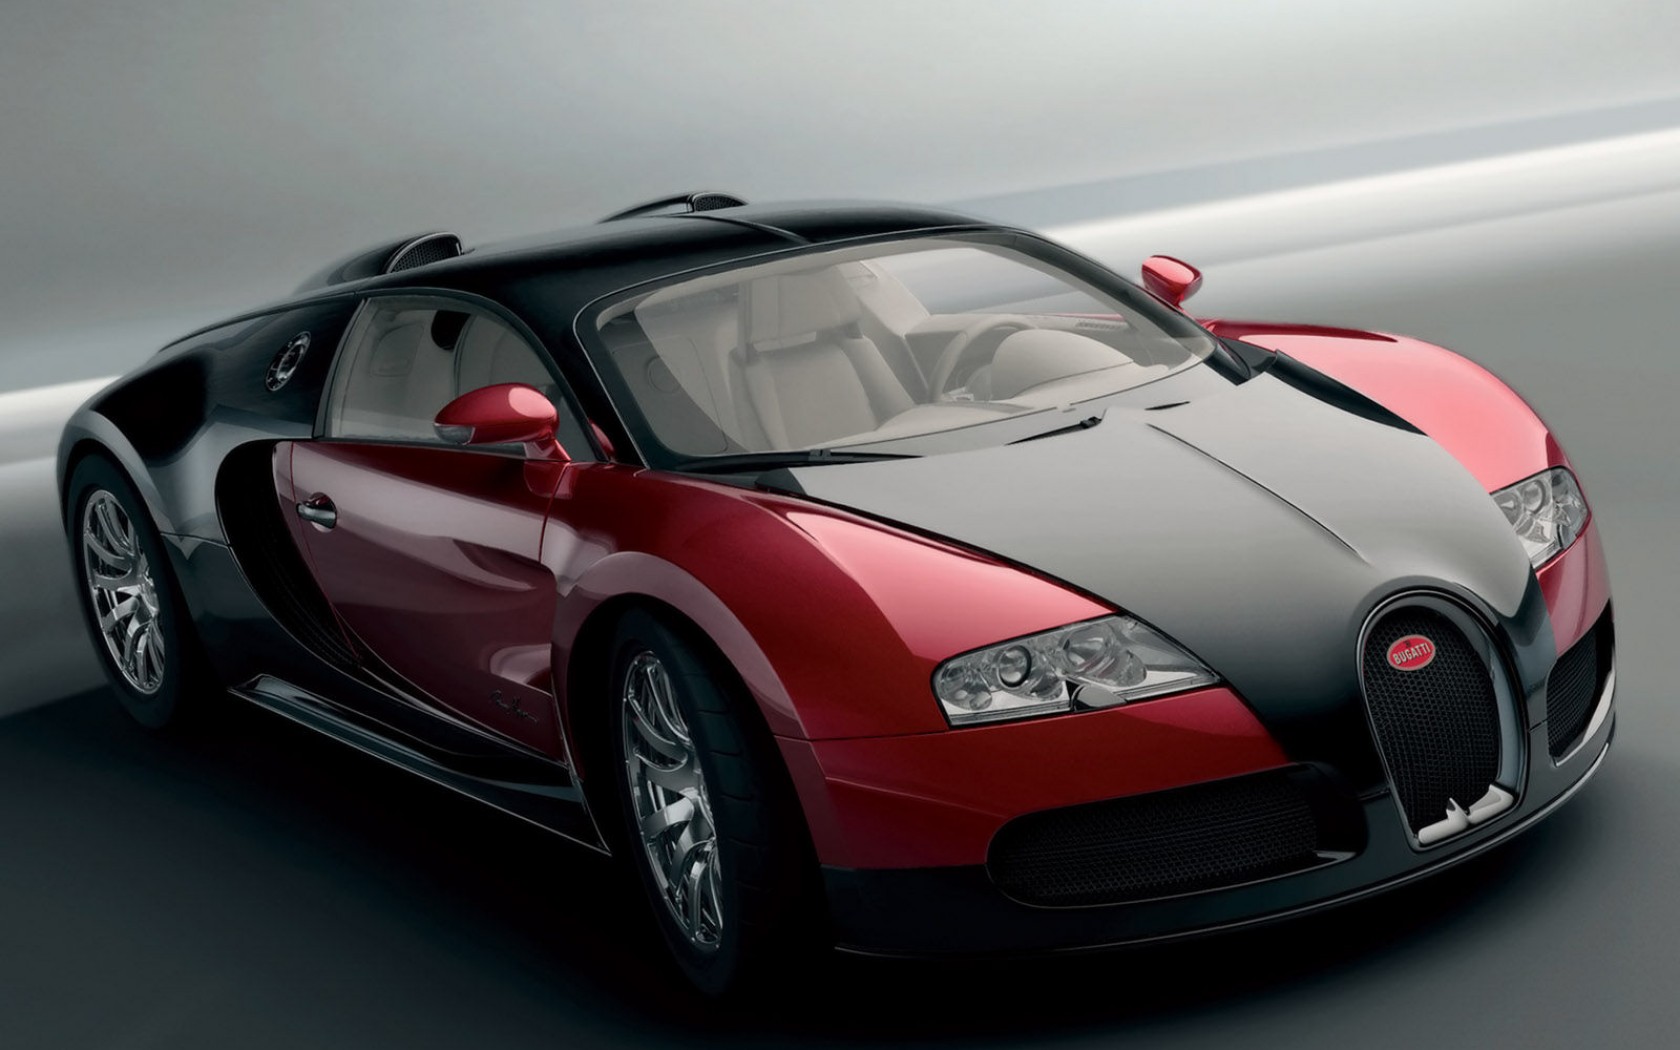  Free download Bugatti Veyron Black Exclusive HD Wallpapers 1920x1200 